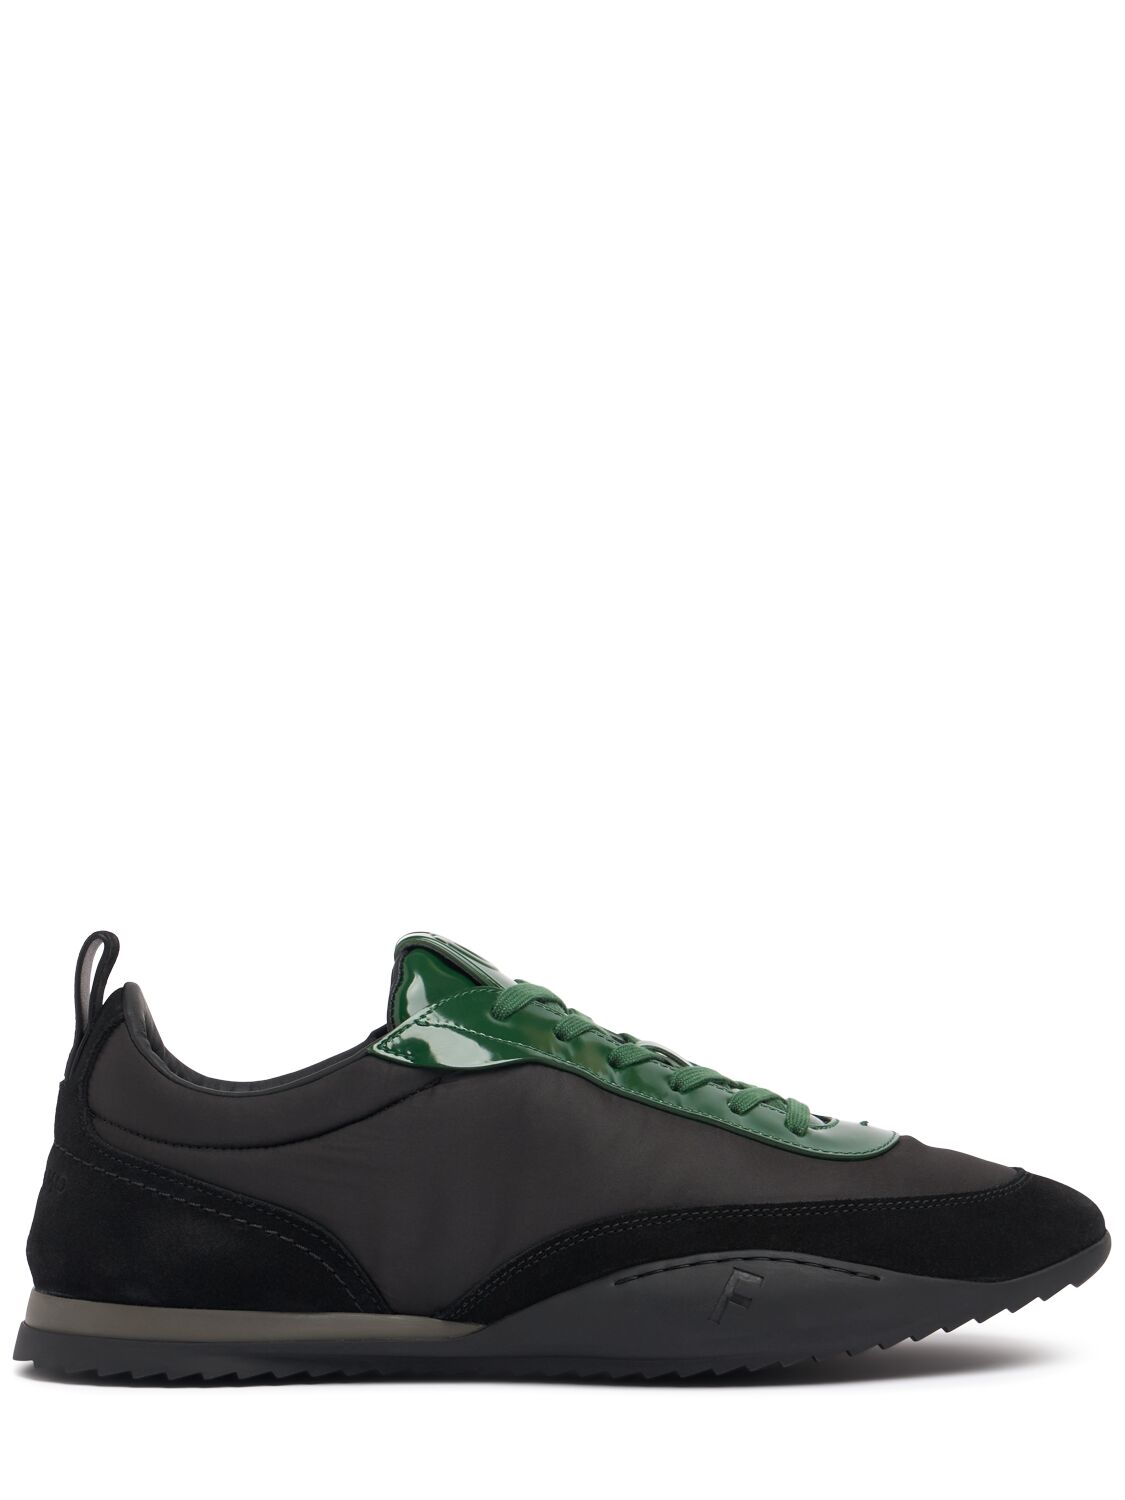 Ferragamo Detroit Leather & Nylon Sneakers In Black,green